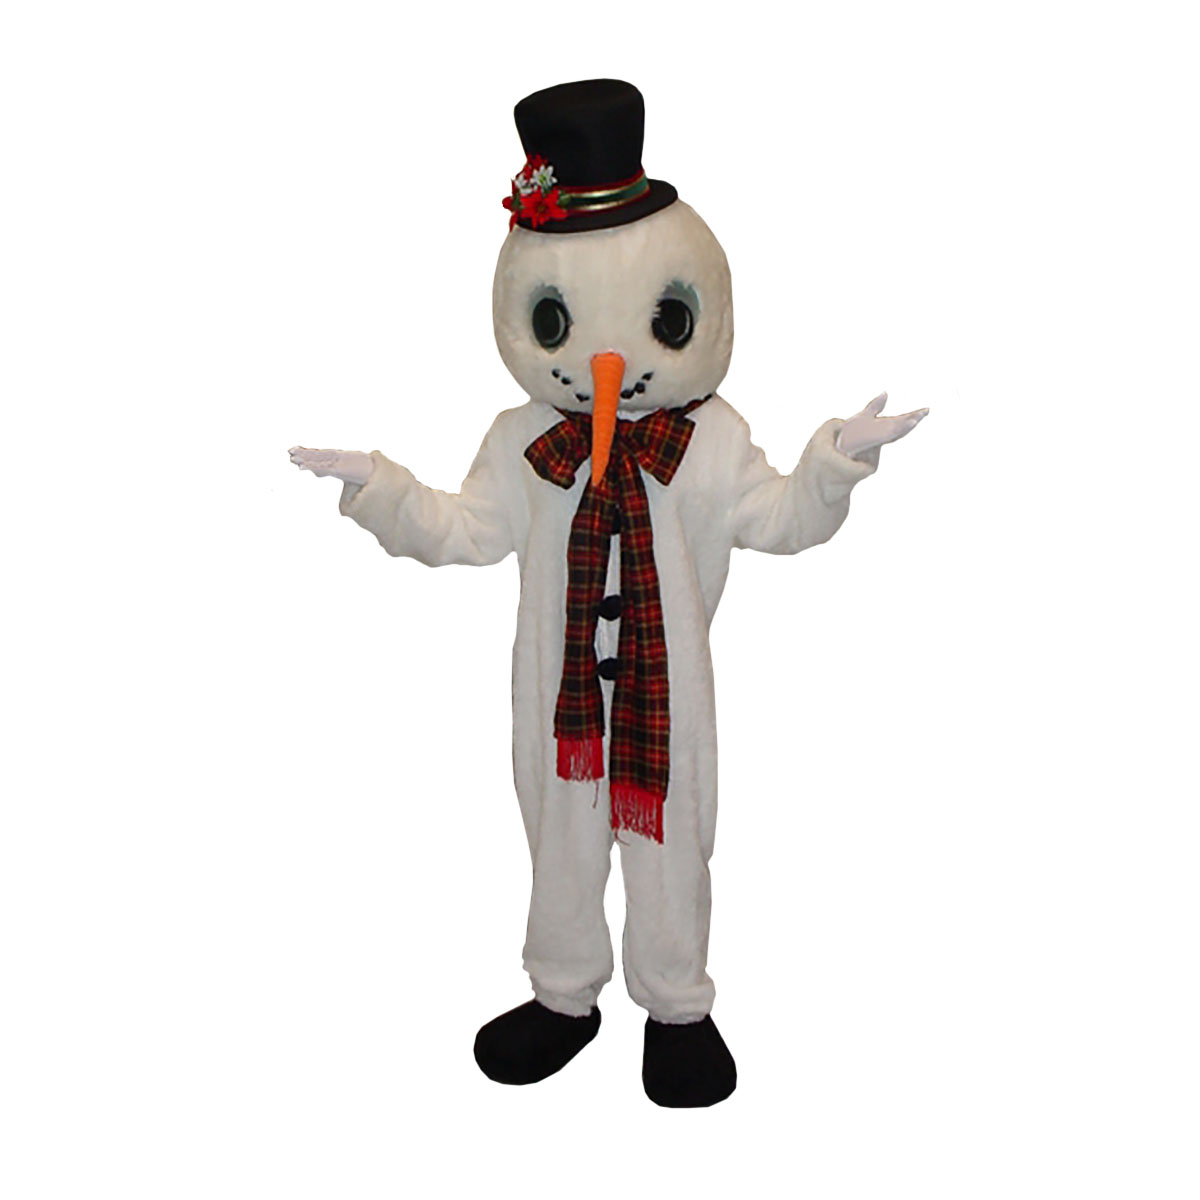 Snowman Costume